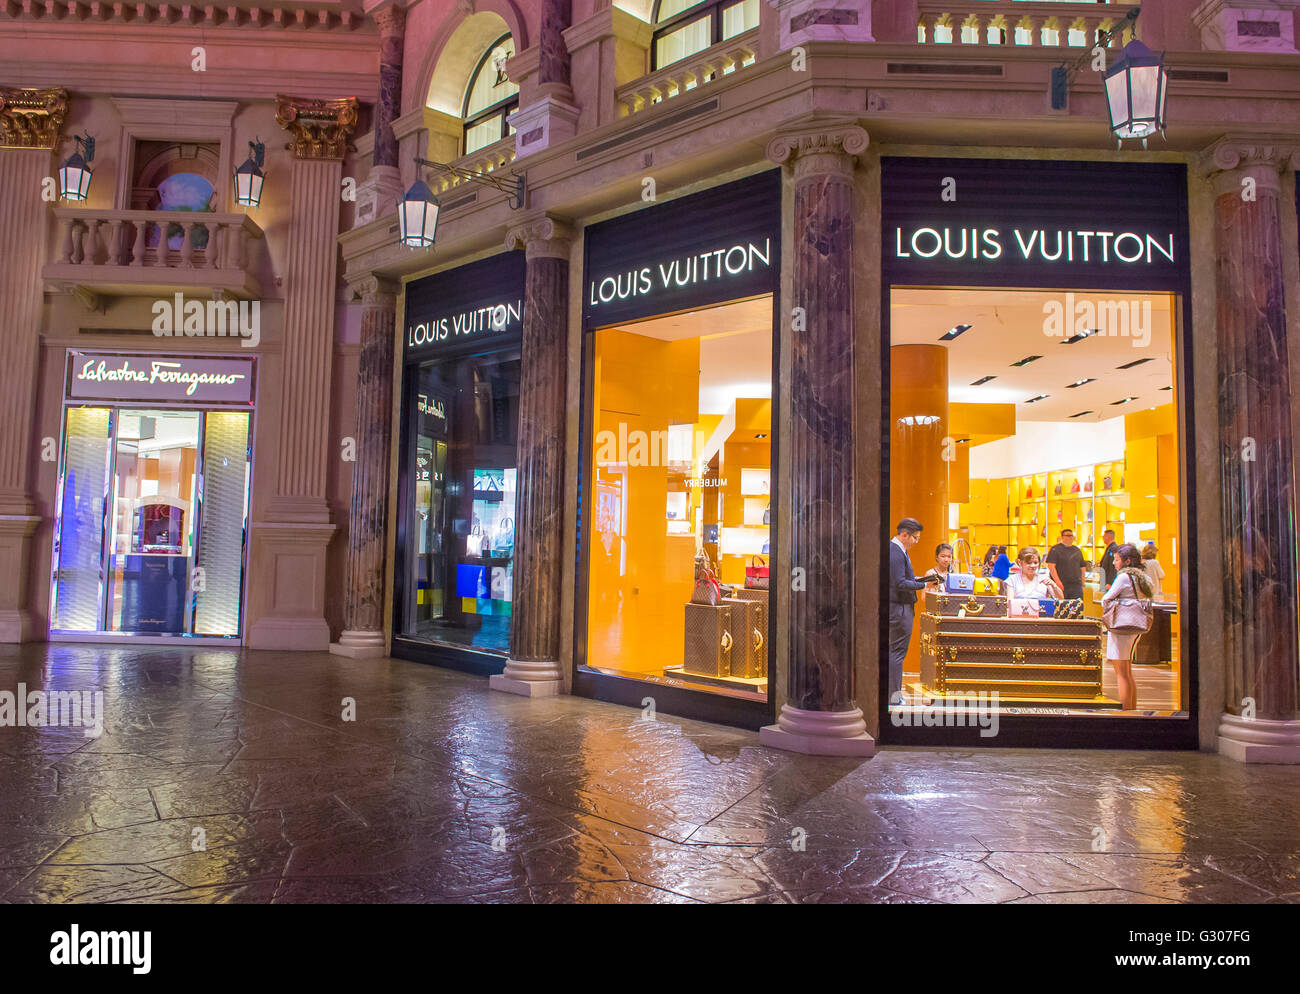 Louis Vuitton Store On The Las Vegas Strip Stock Photo - Download